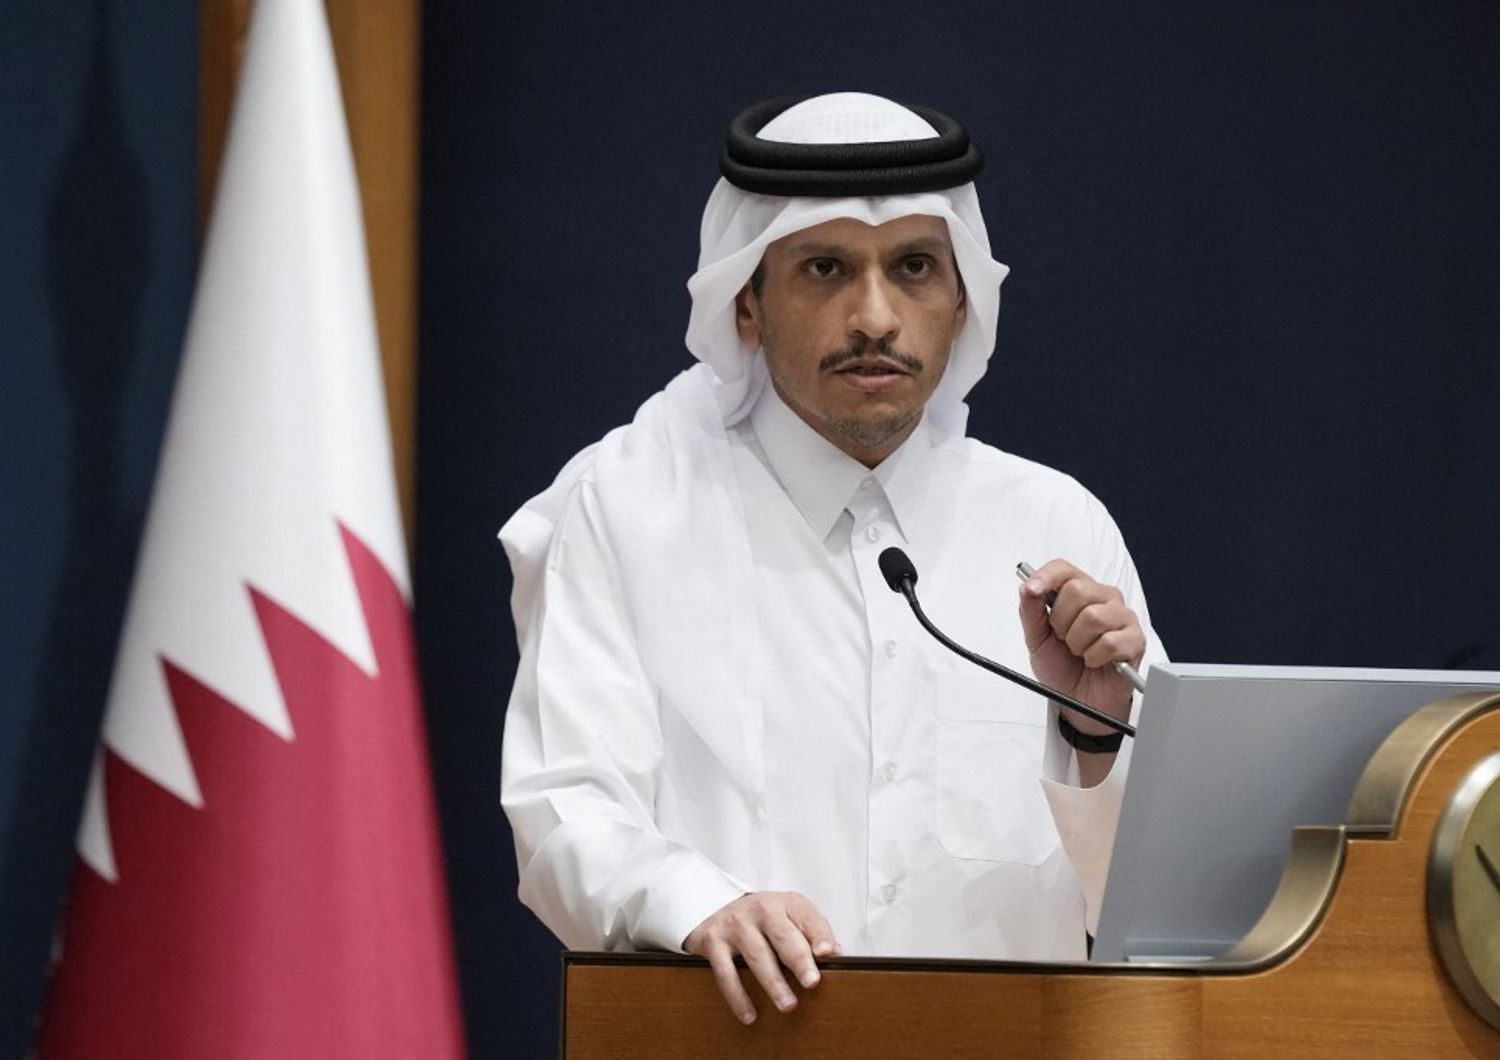 Qatar's Prime Minister and Foreign Minister Mohammed bin Abdulrahman Al Thani&nbsp;